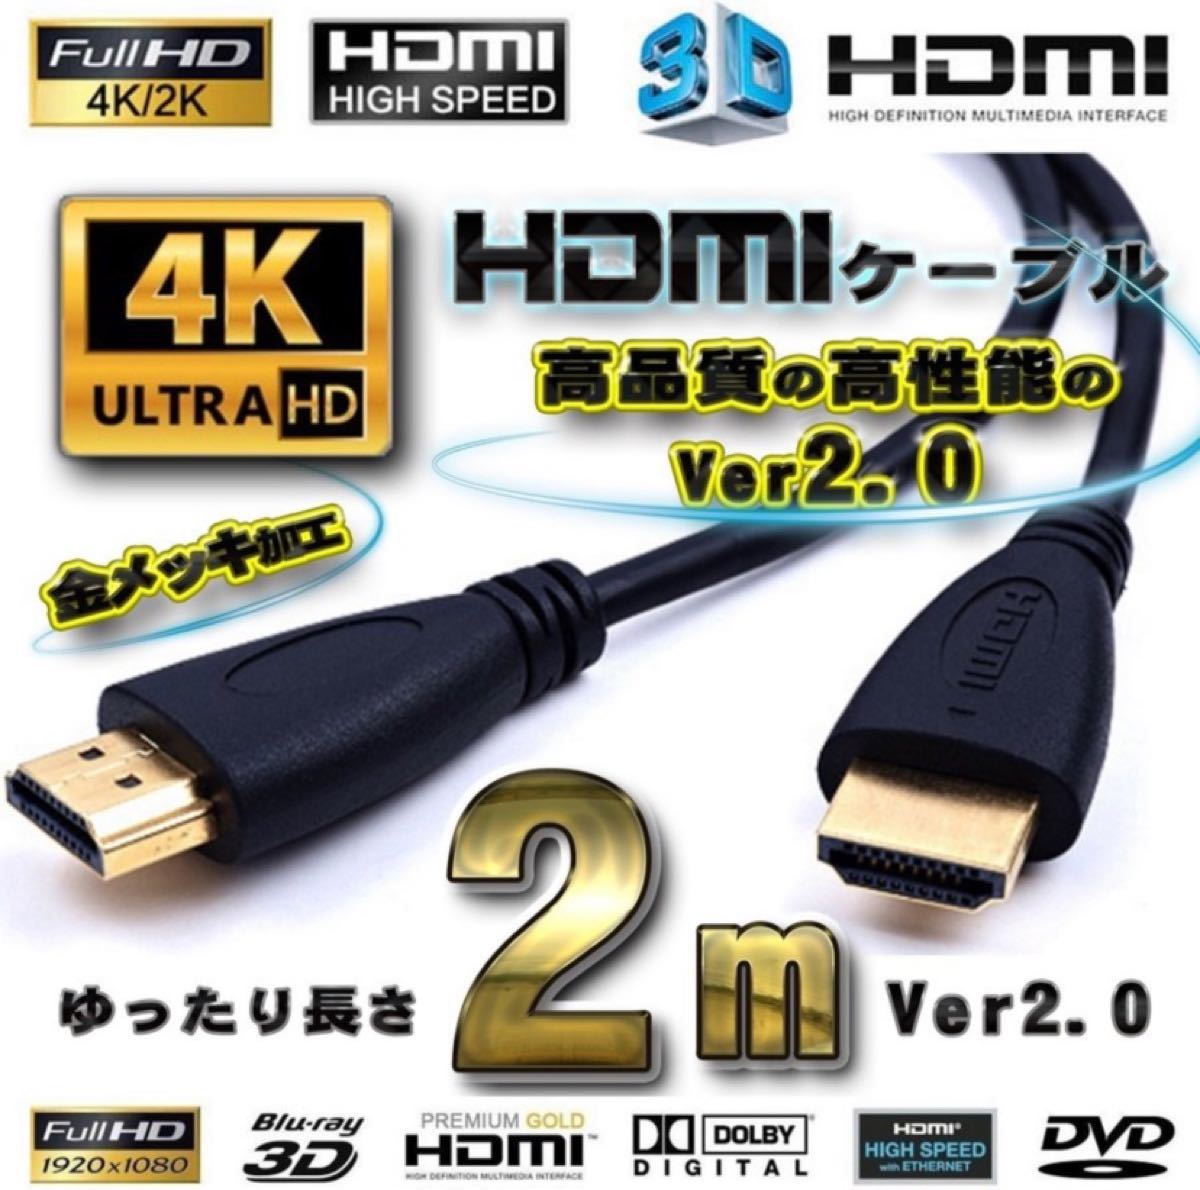 HDMIケーブル 2m 4K 3D対応 Ver2.0 フルハイビジョン